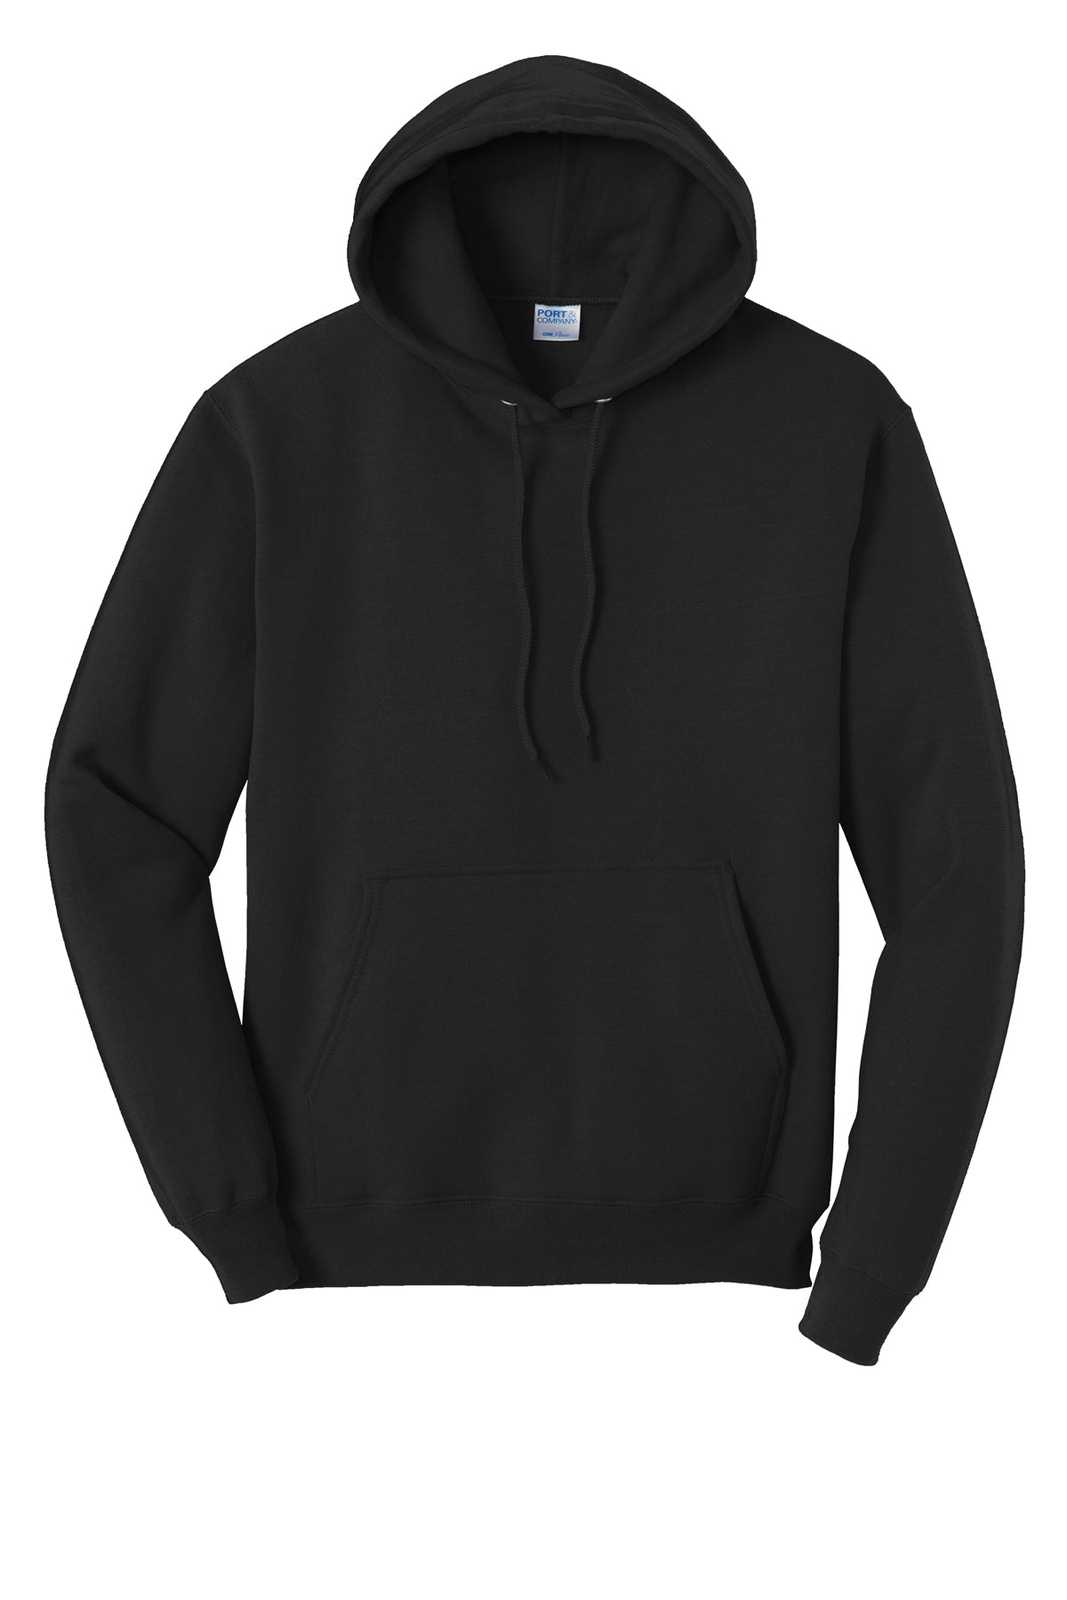 Port & Company PC79H Fleece Pullover Hooded Sweatshirt - Jet Black - HIT a Double - 1